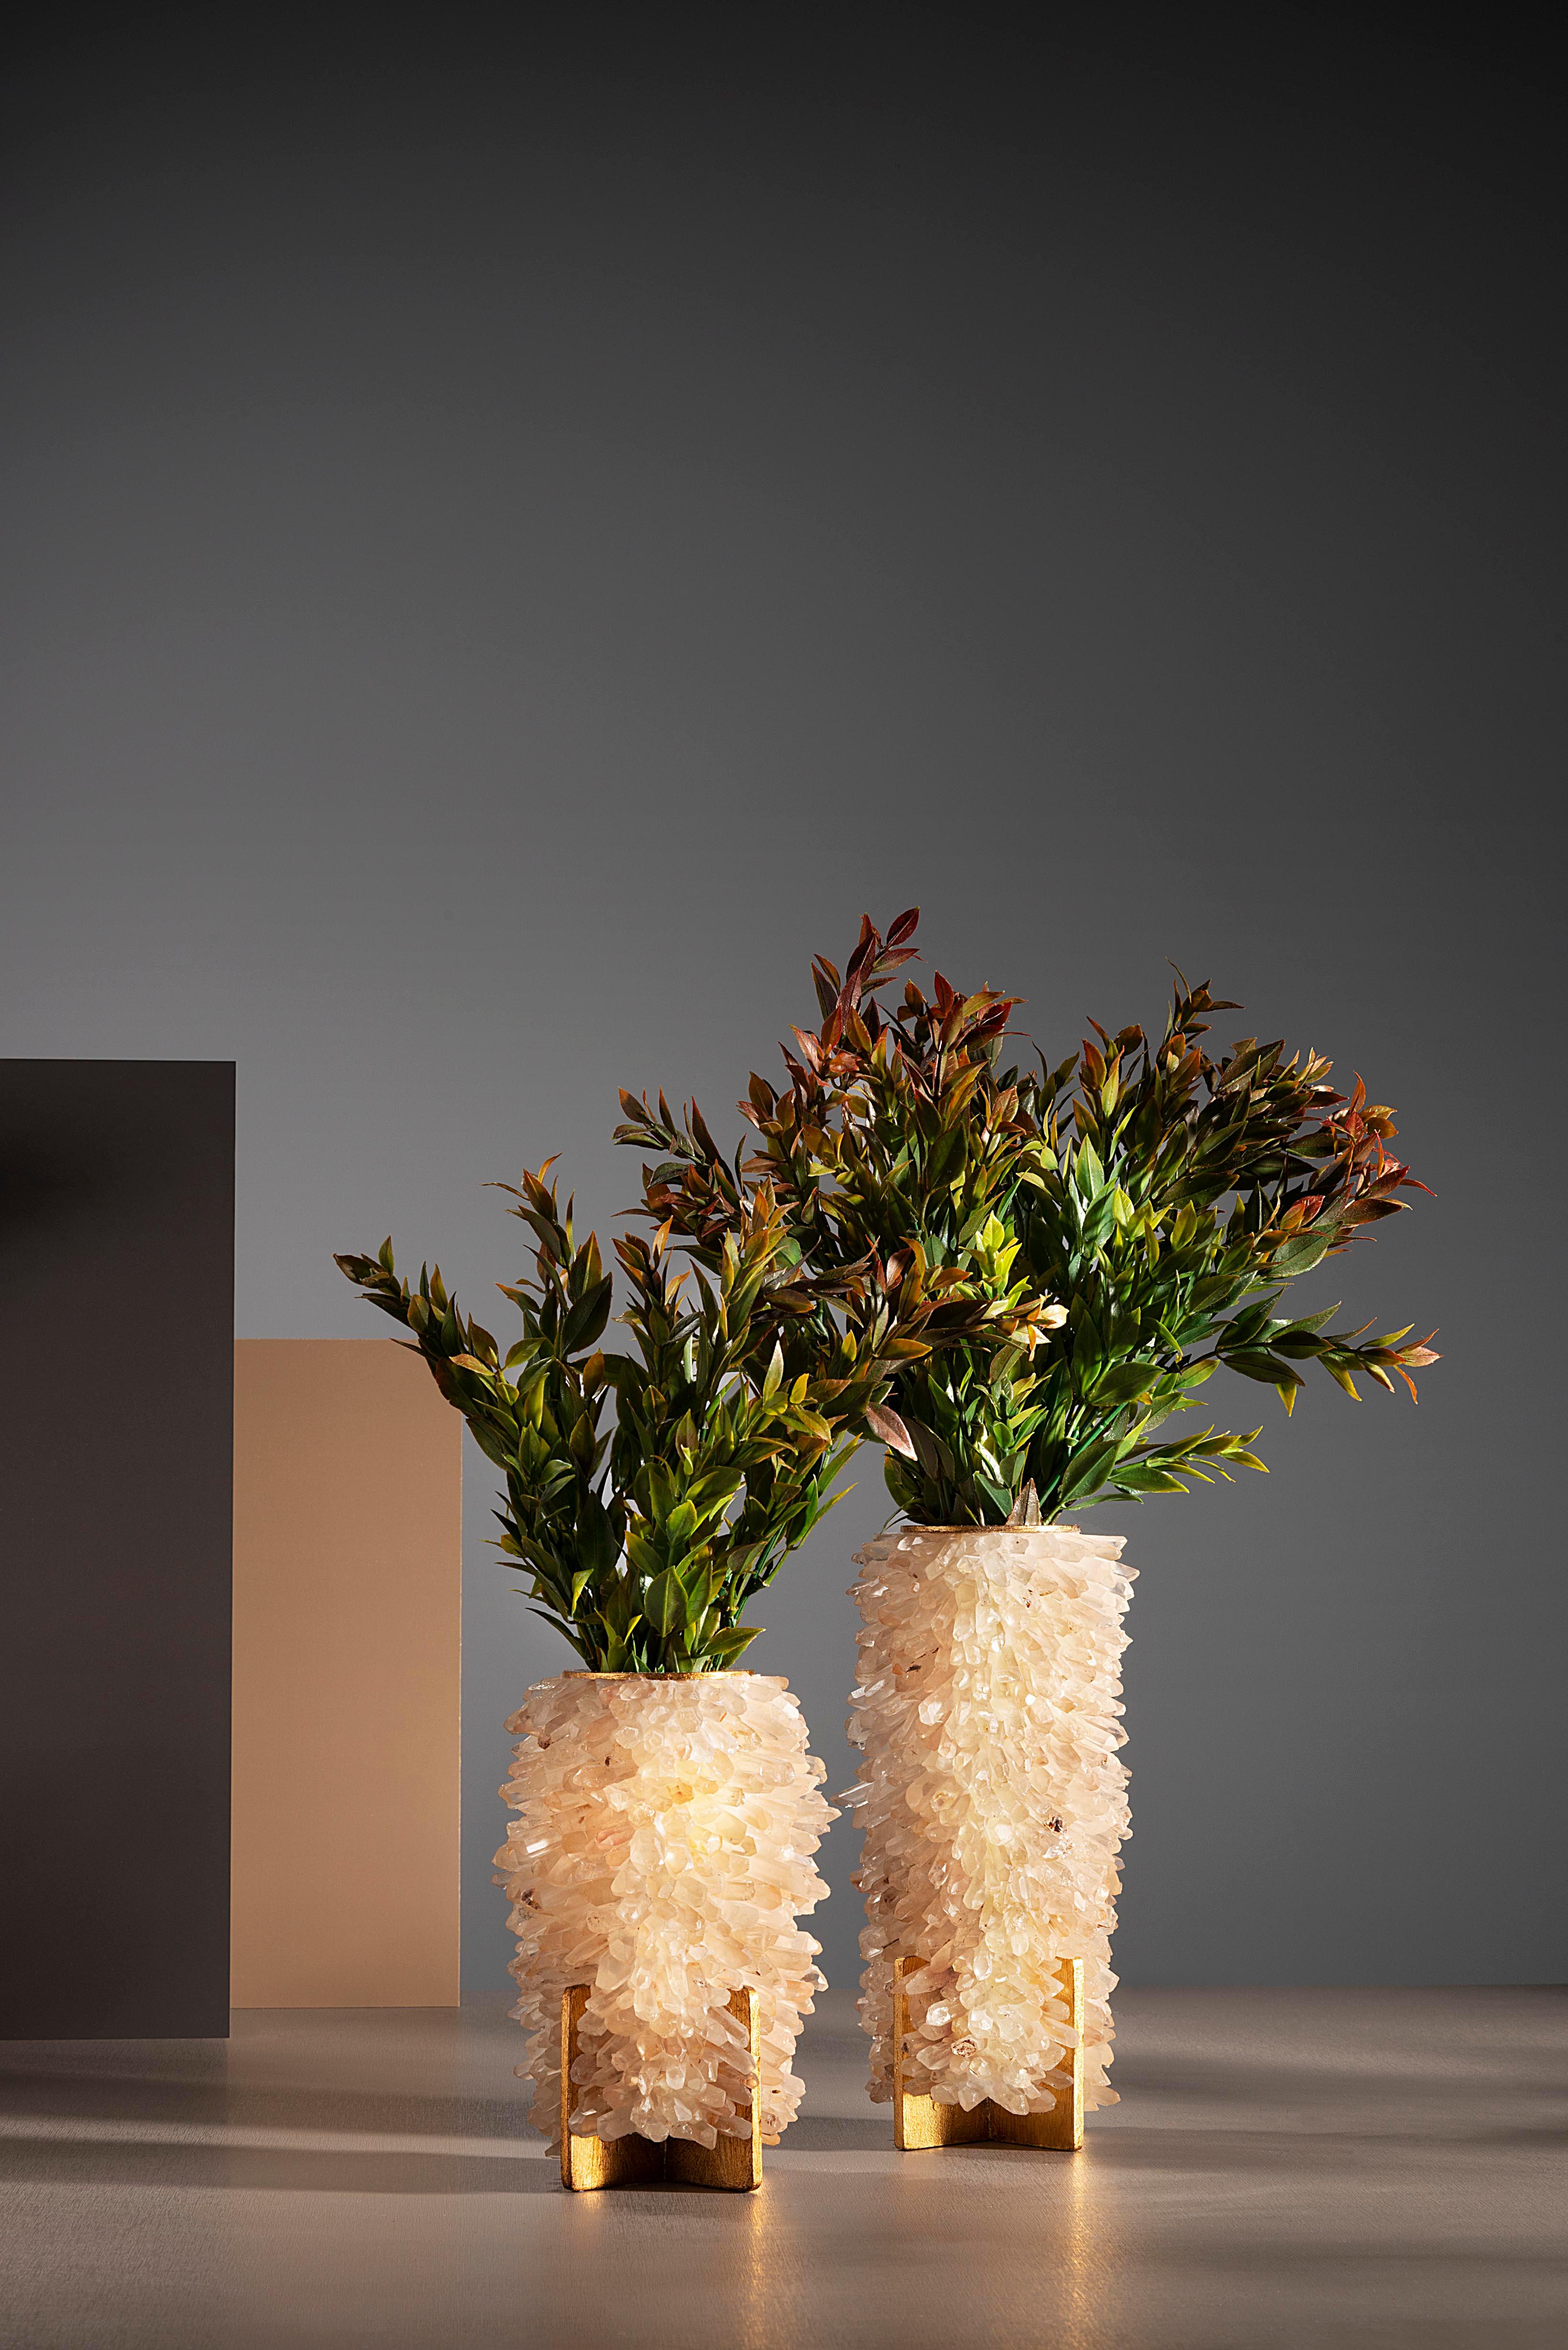 Medium Quartz sculptural vase by Aver 
Dimensions: D 20 x H 28 cm
Materials: Quartz, steel, polyvinyl chloride, resin.
 